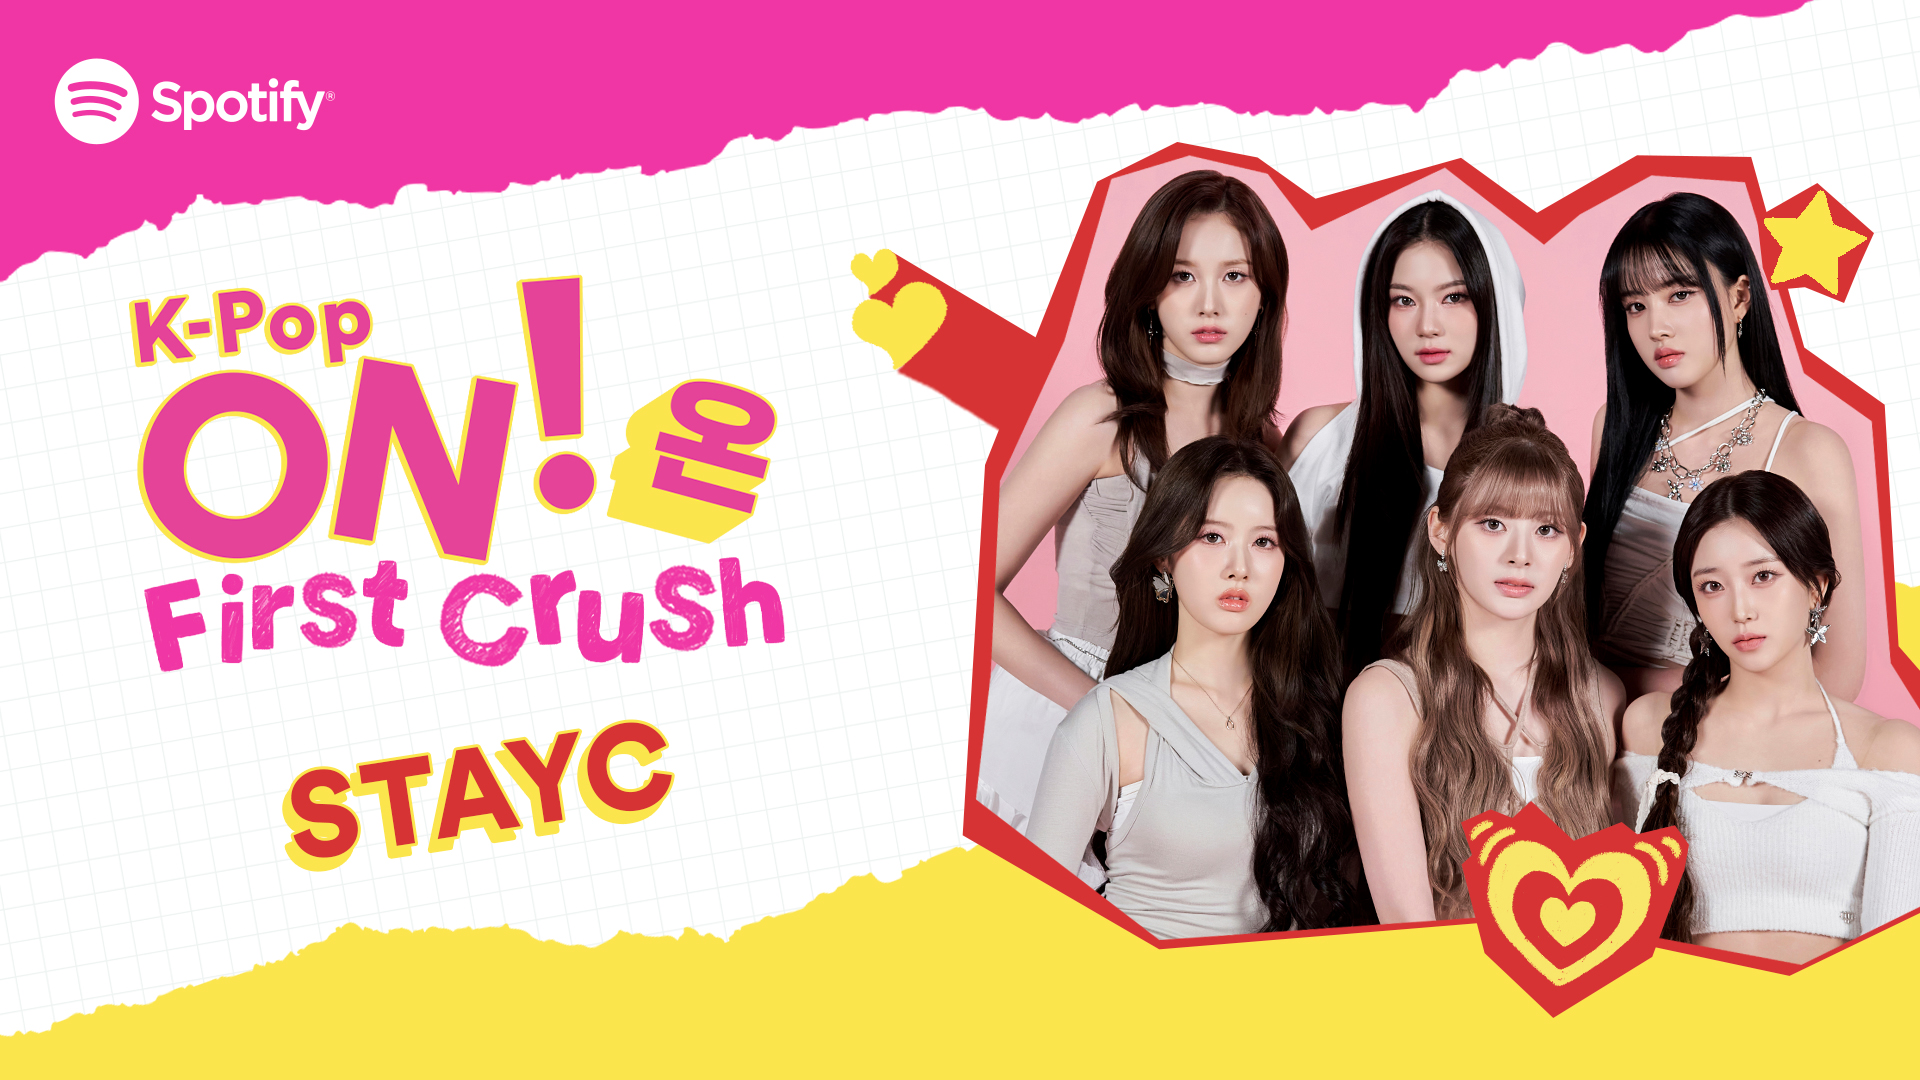 STAYC para a campanha K-Pop ON! (온) First Crush